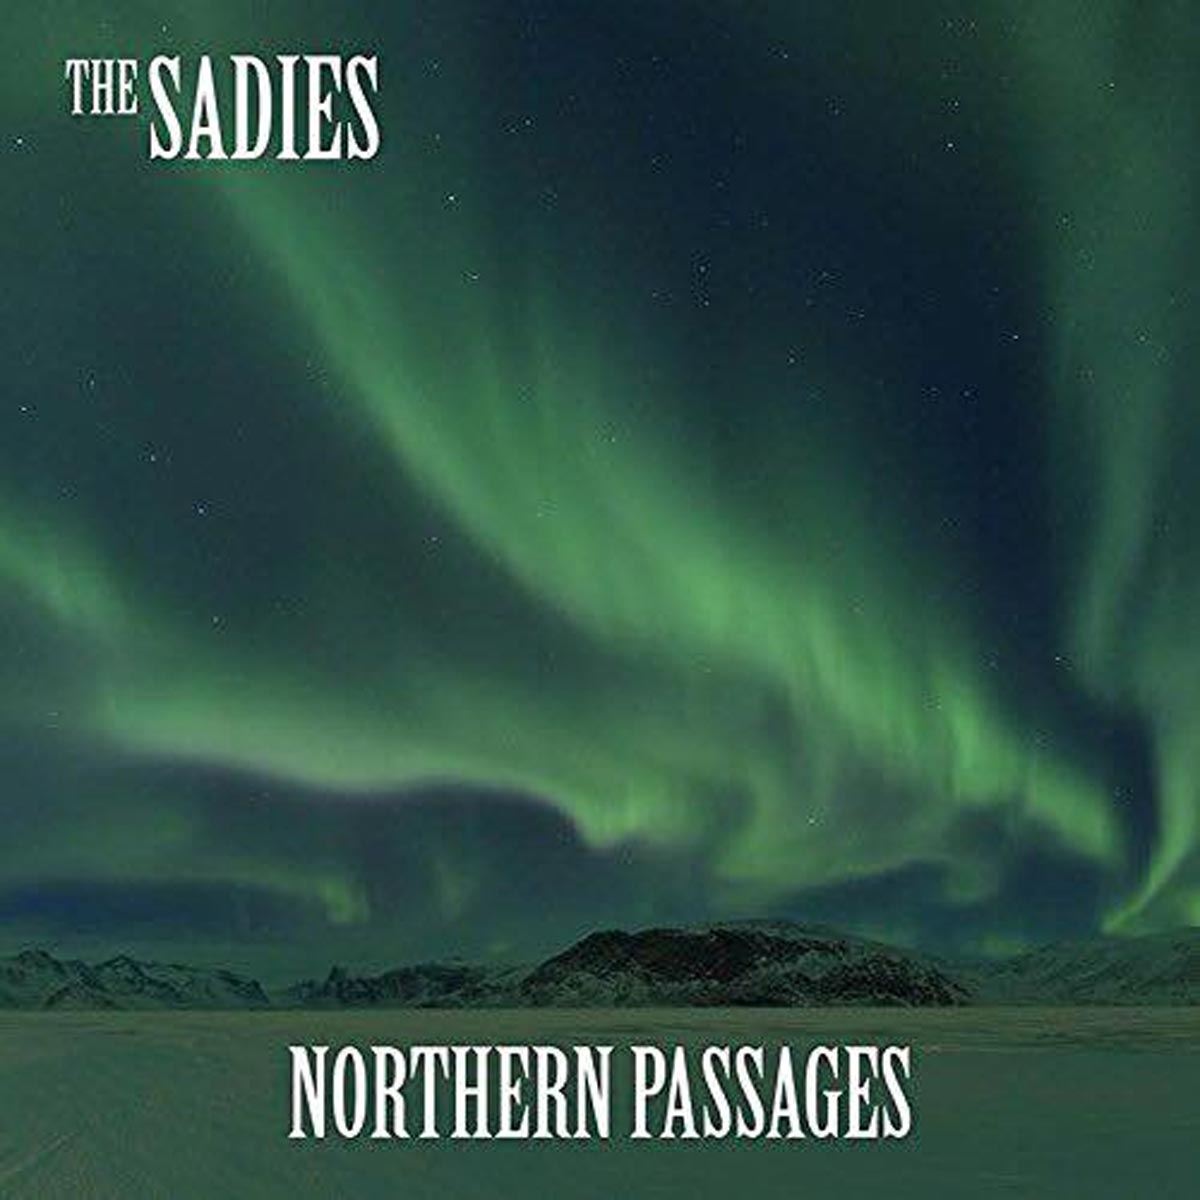 THE SADIES - Northern Passages